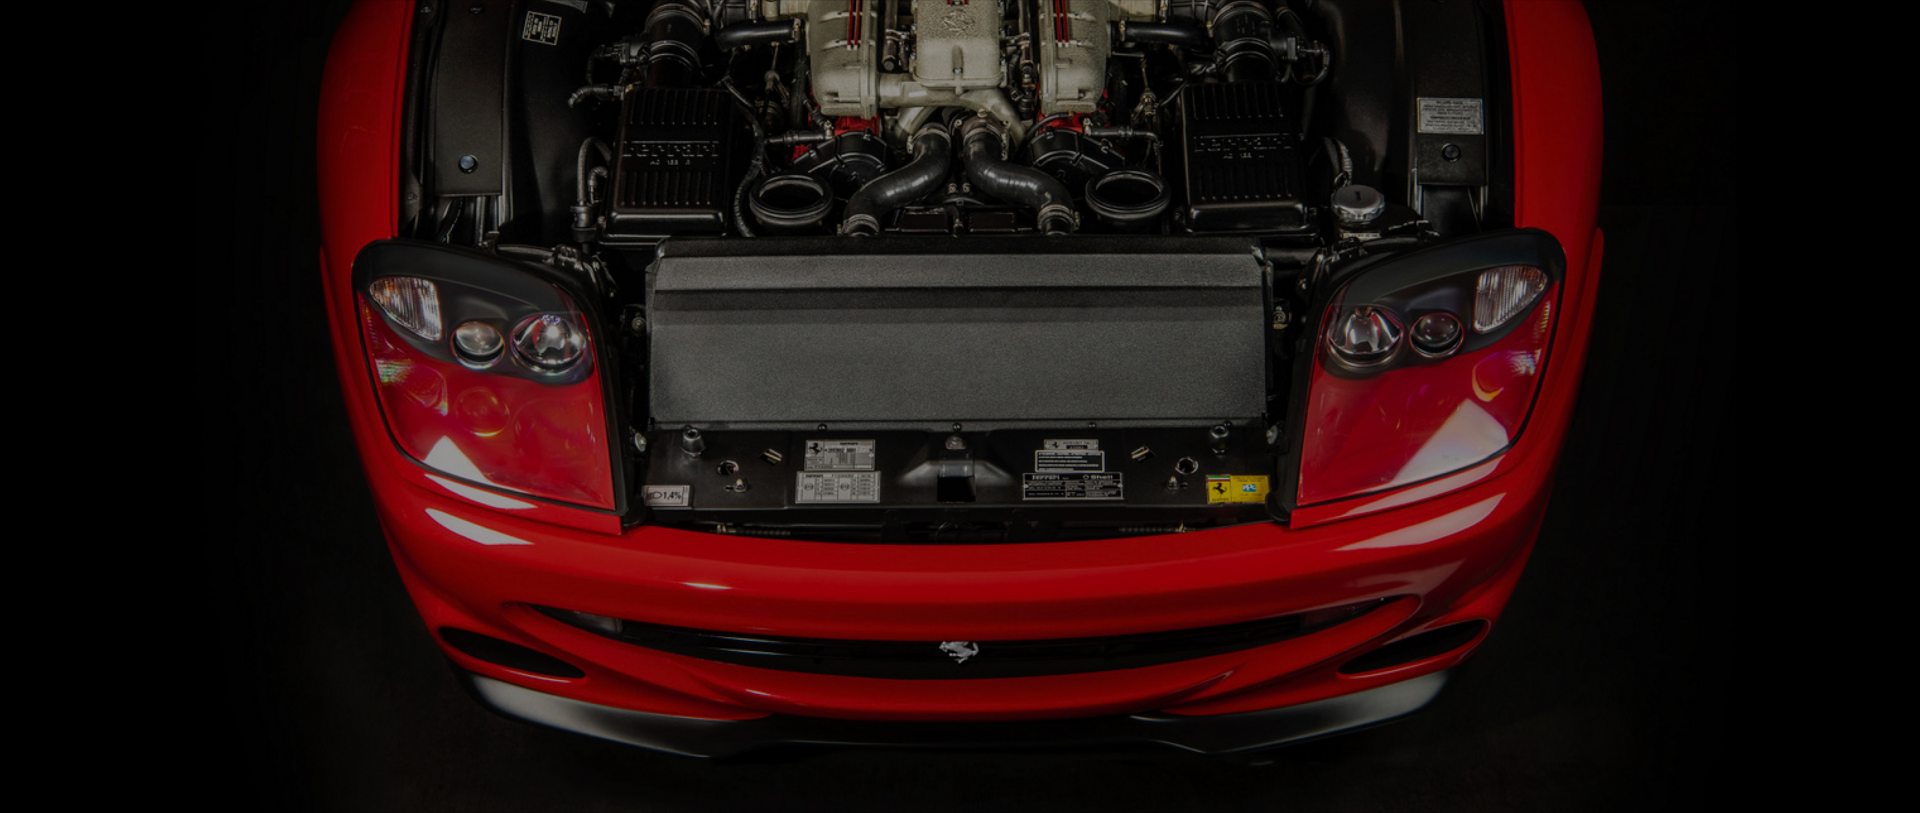 Imponent engine of Ferrari {insert model} Majestic Presence of 255 horse power